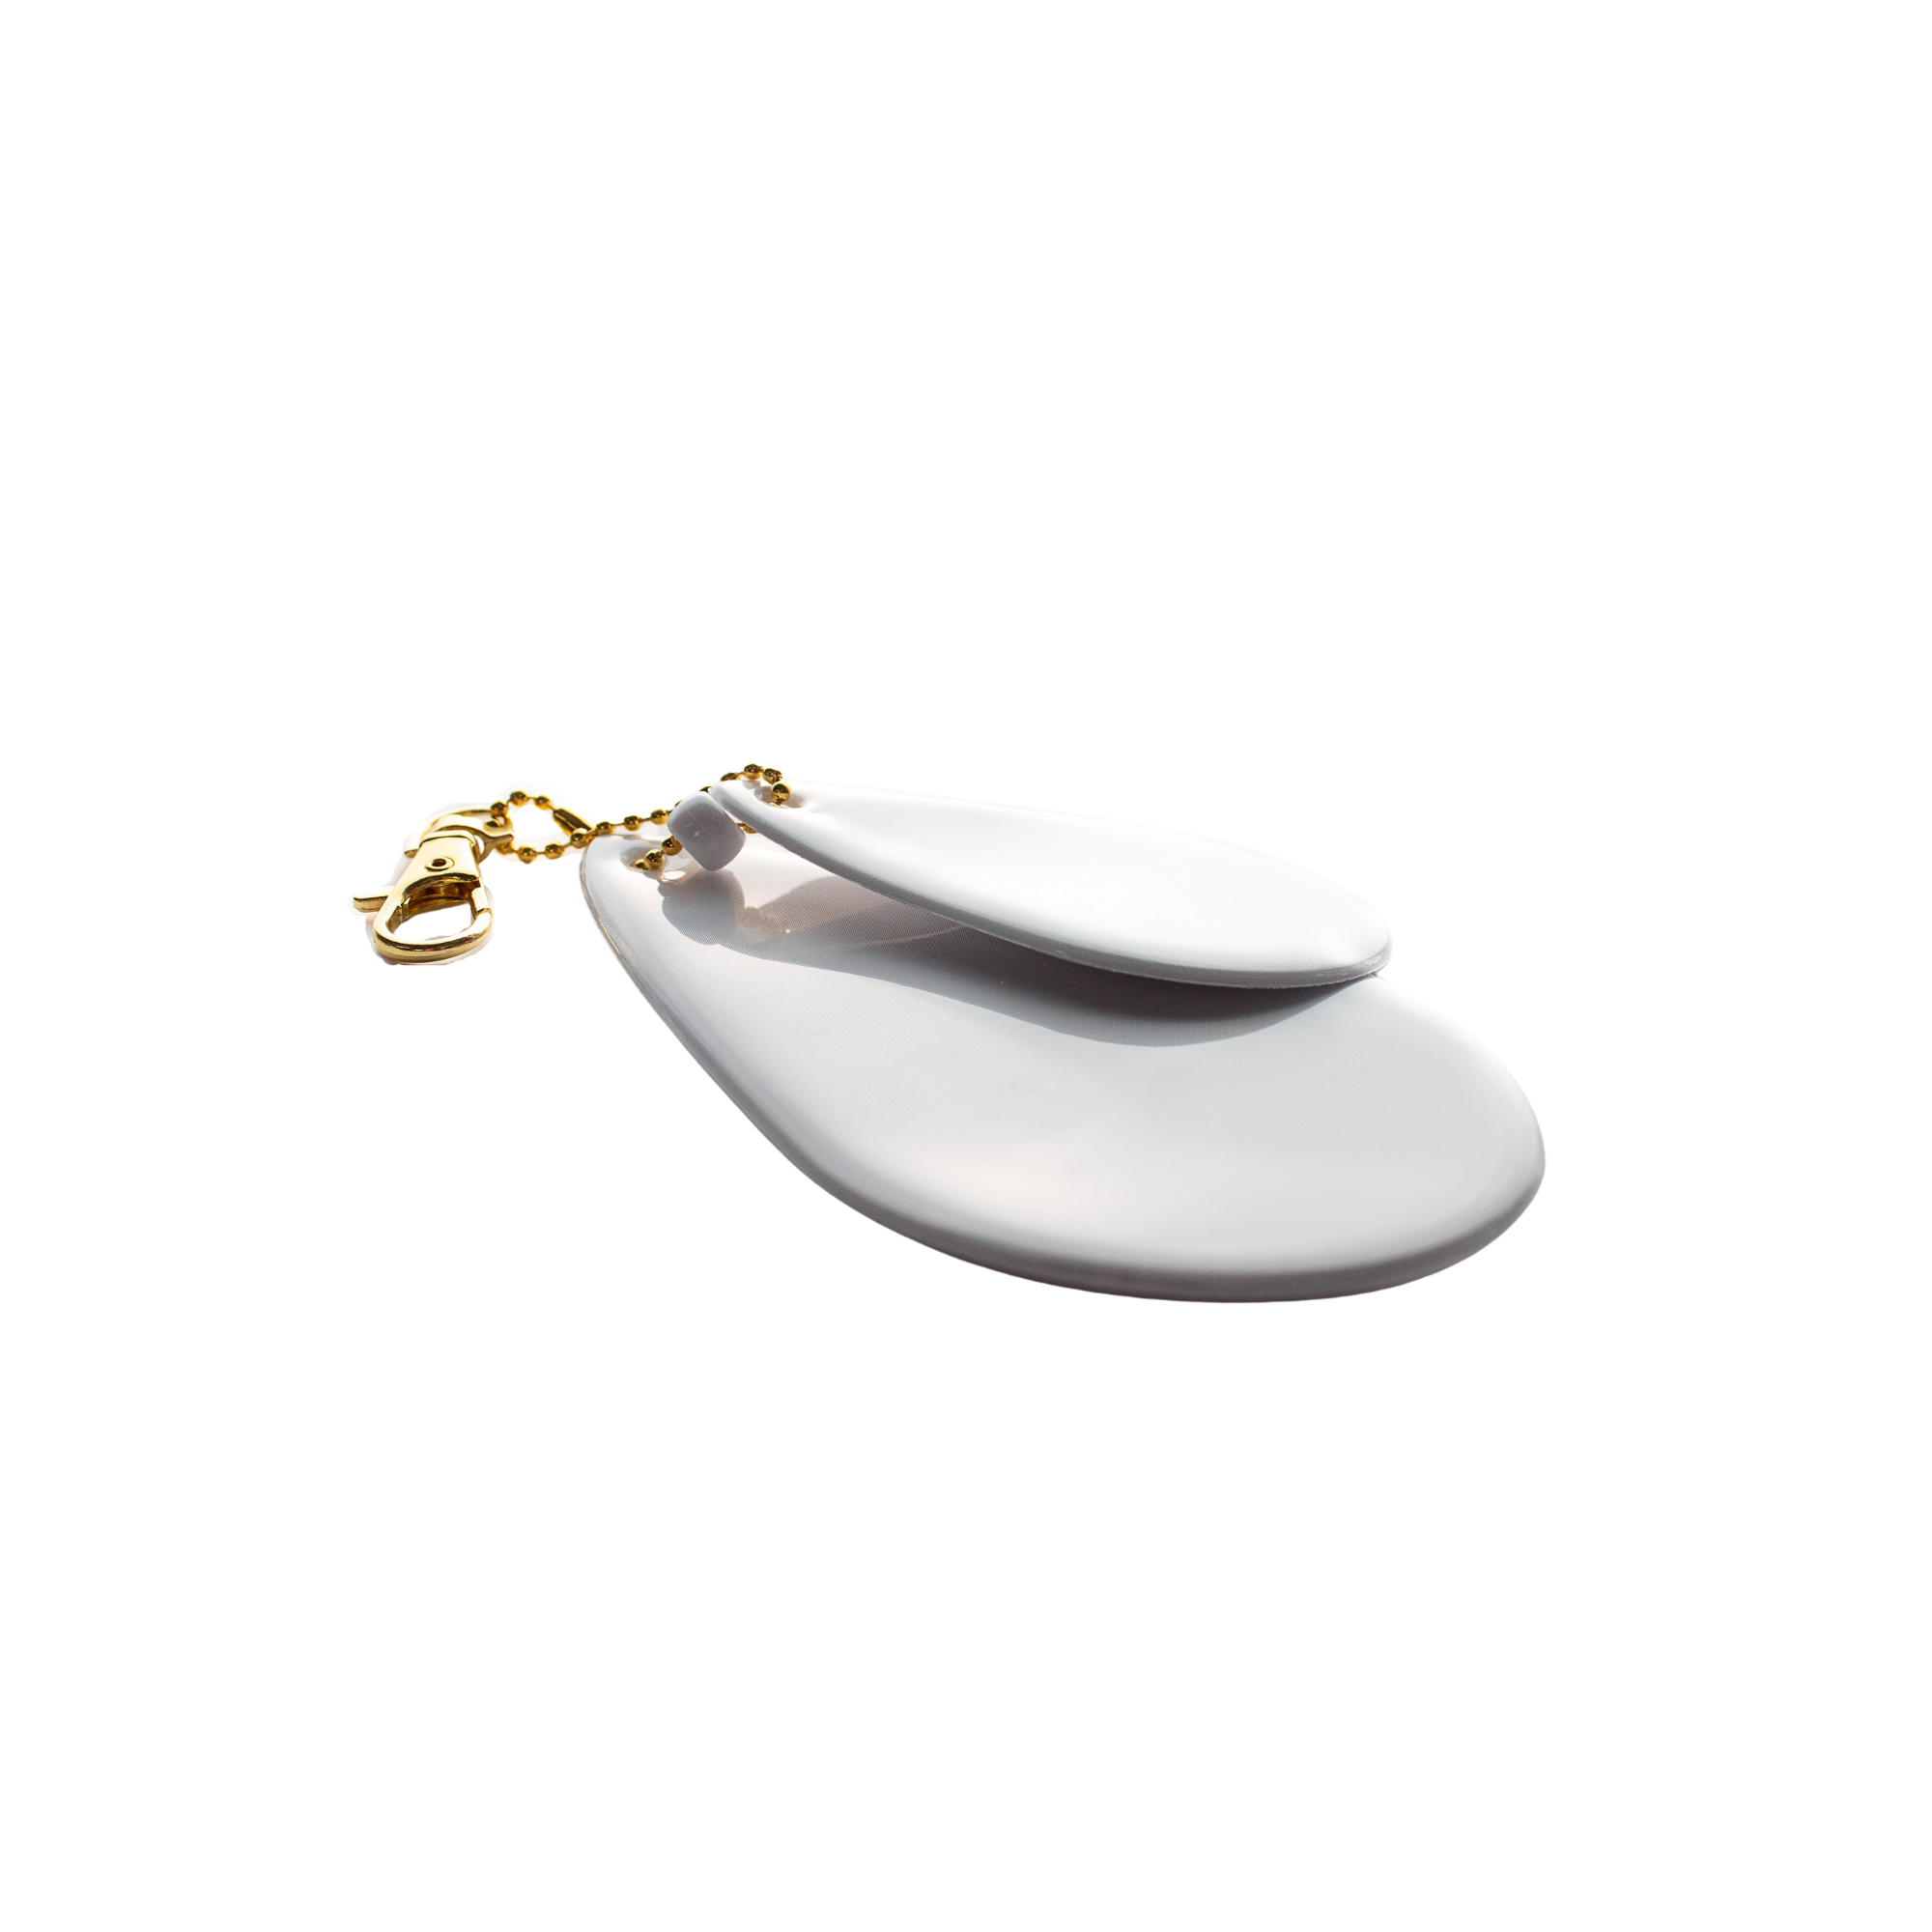 Lifesaver drop reflector white - Nordic Innovation Shop